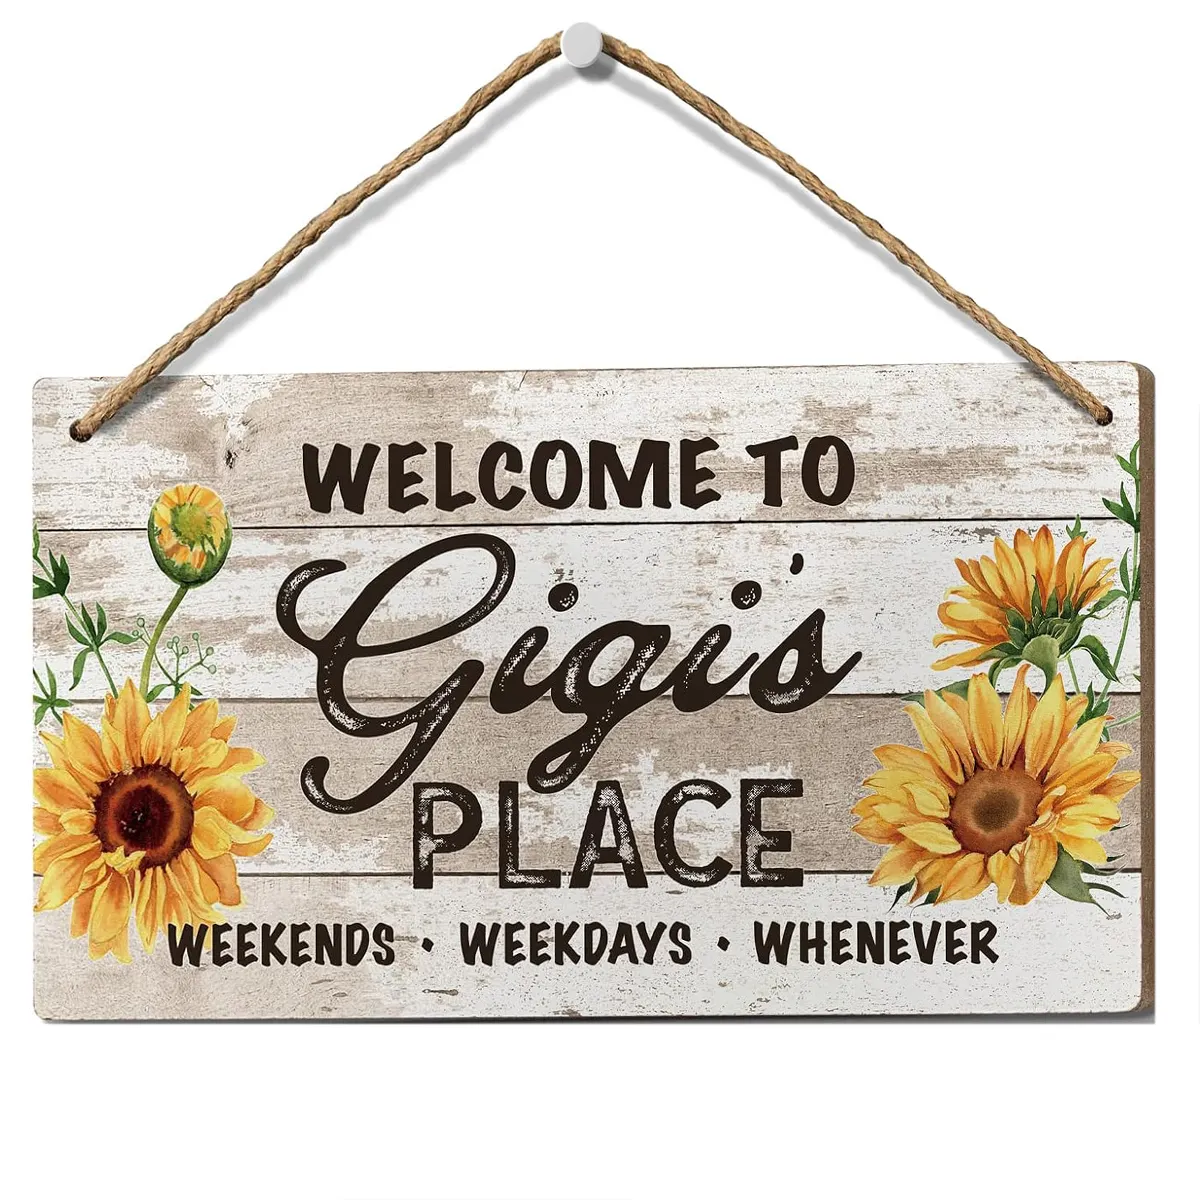 Gigi's Place Sign에 오신 것을 환영합니다 할머니를위한 해바라기와 복고풍 빈티지 현관 현관 홈 장식 Gigi를위한 선물